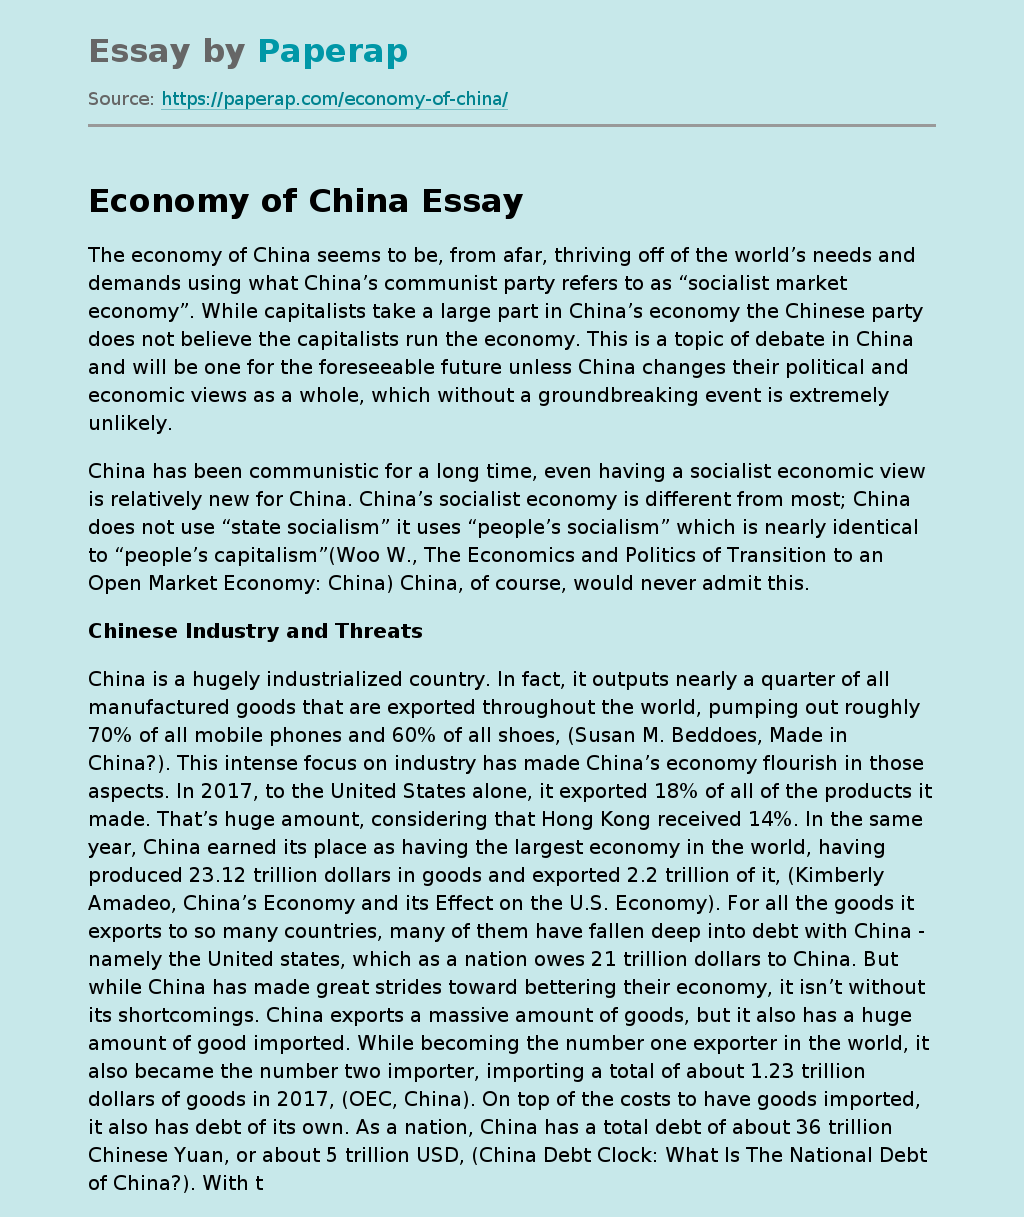 Economy of China